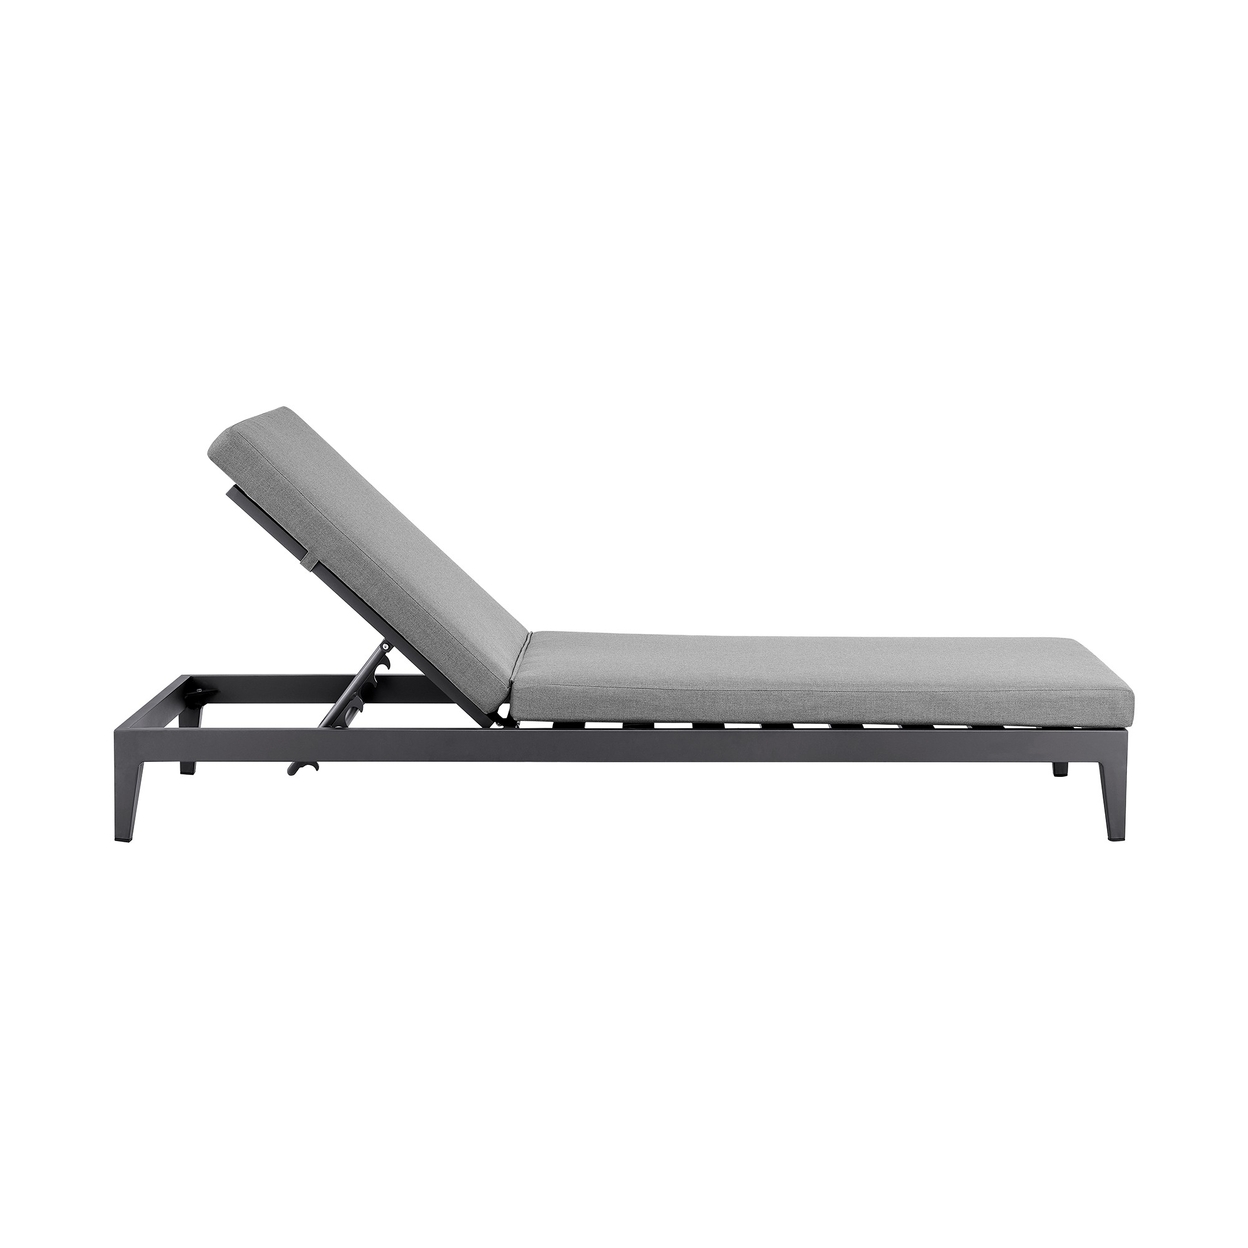 Jax 80 Inch Patio Adjustable Chaise Lounge Chair, Aluminum Frame, Dark Gray- Saltoro Sherpi